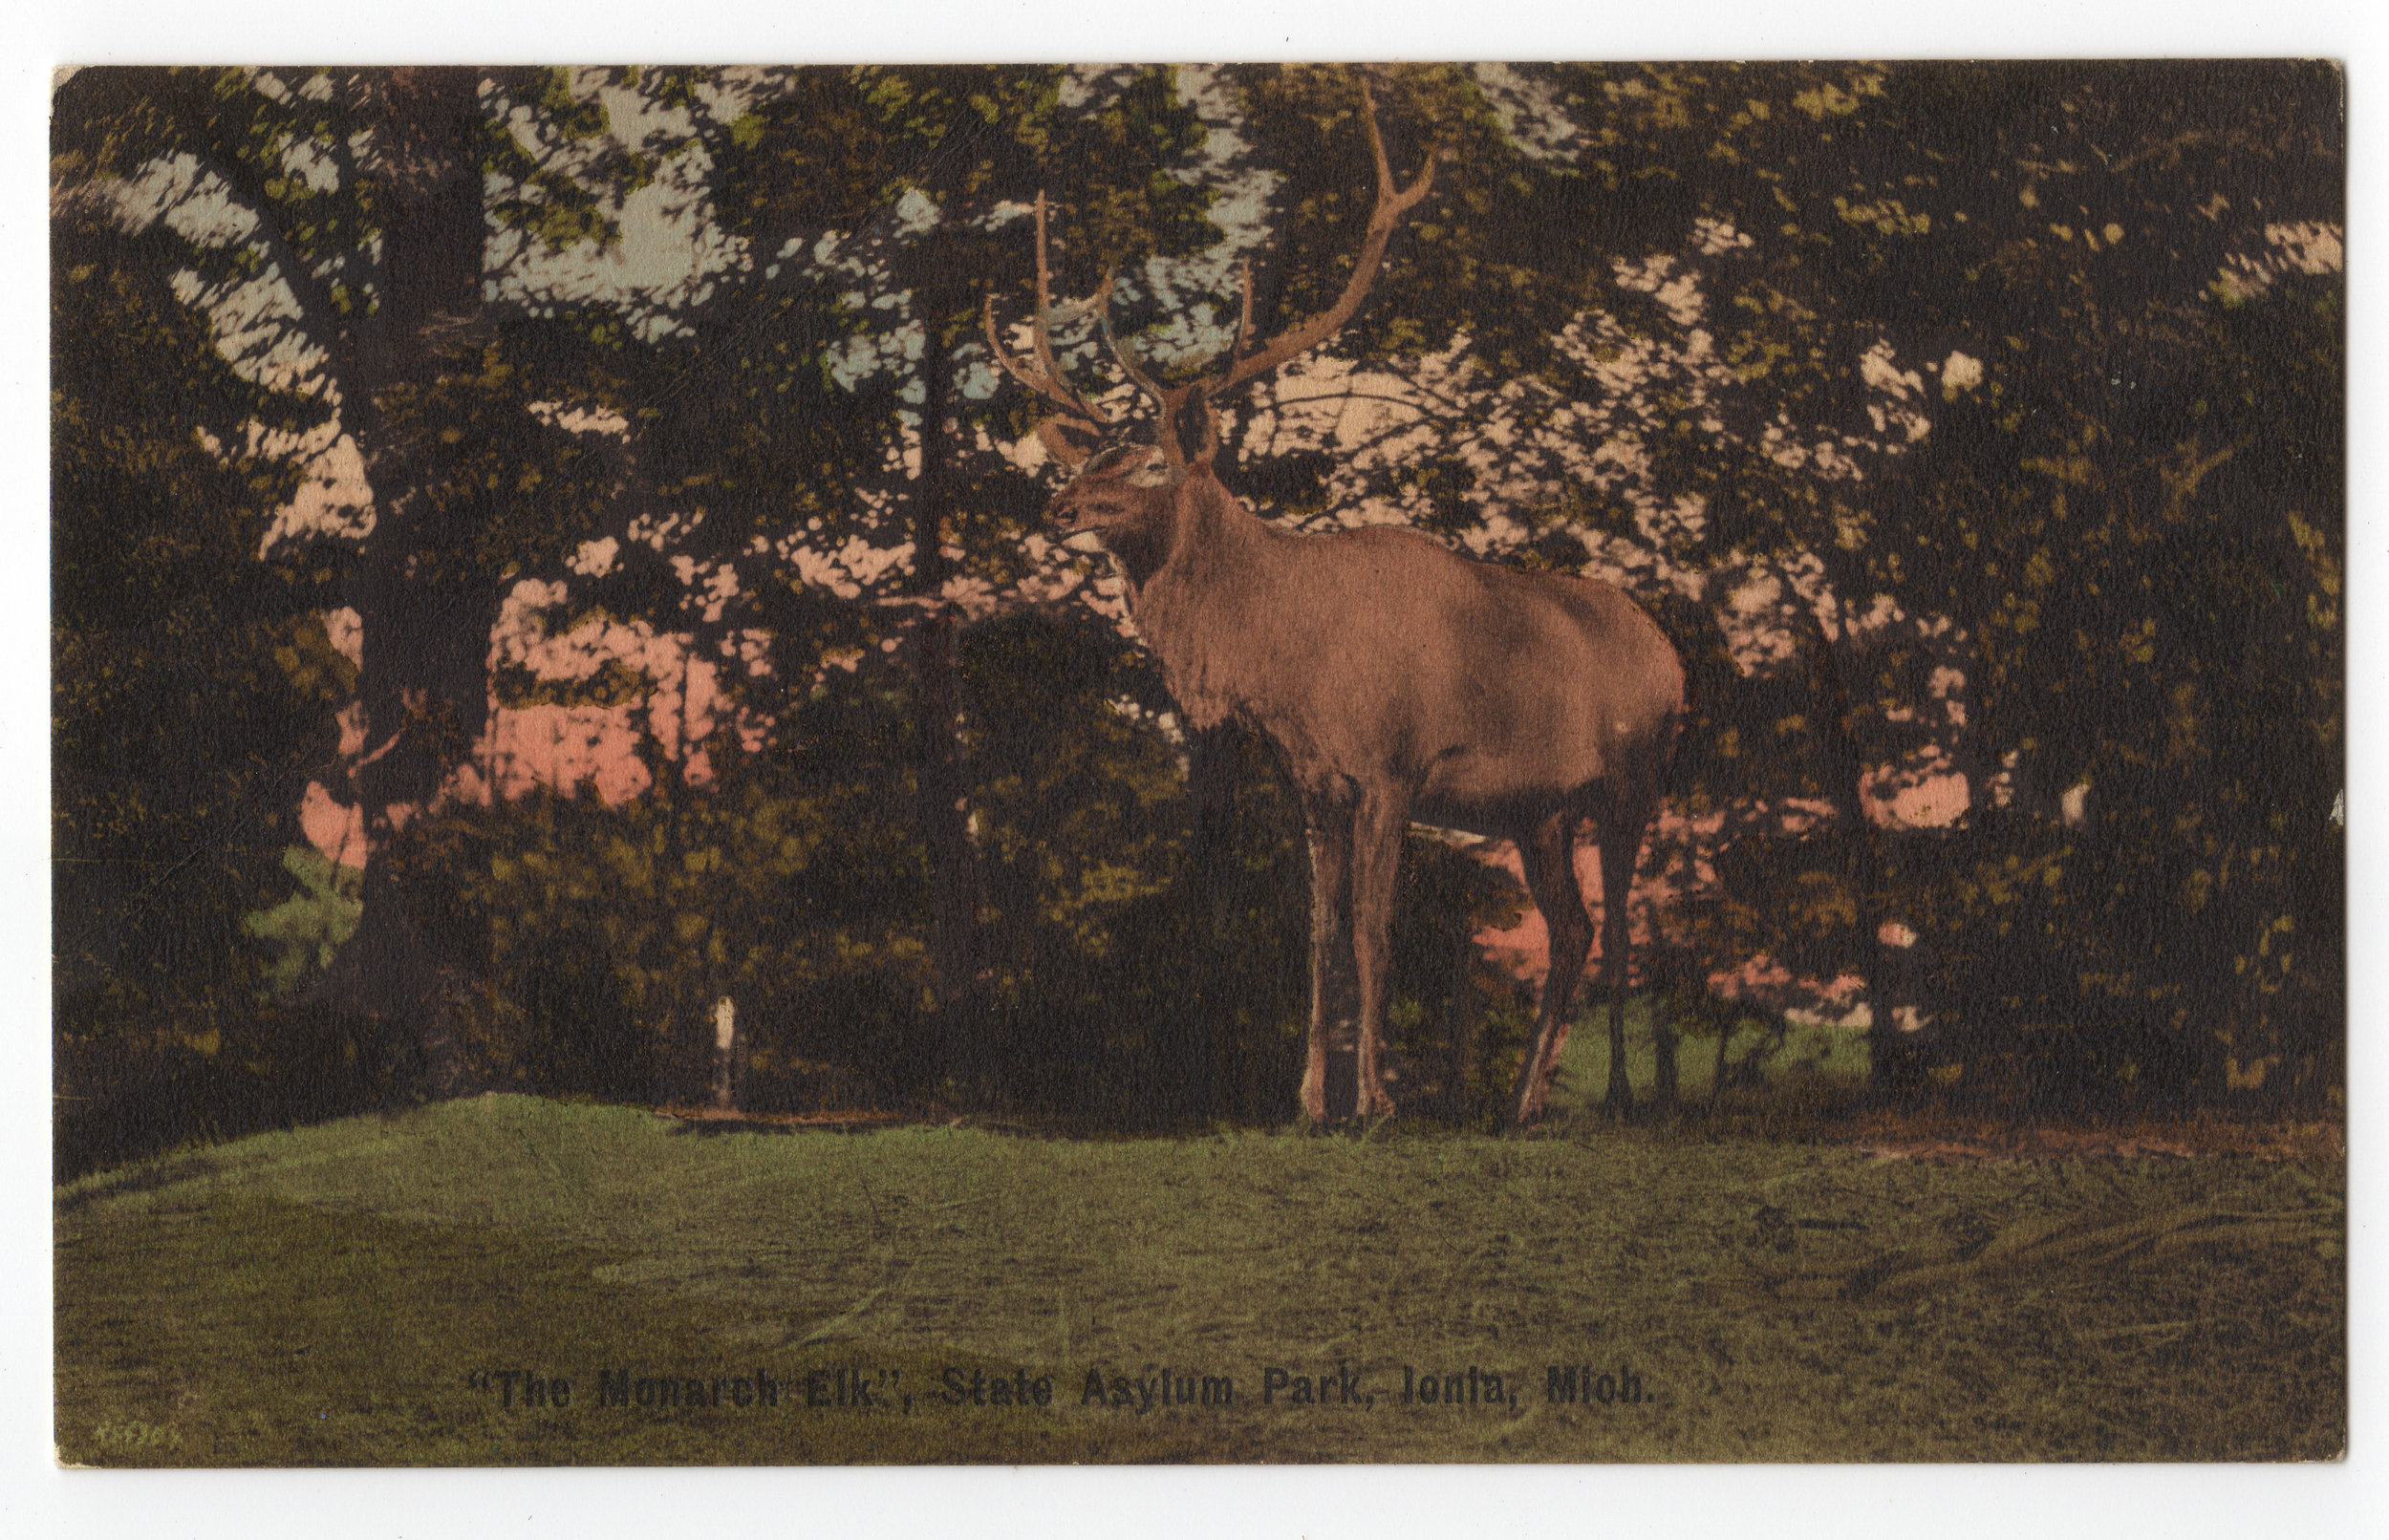 00198-ISH-Postcard 8 FRONT Deer.jpg